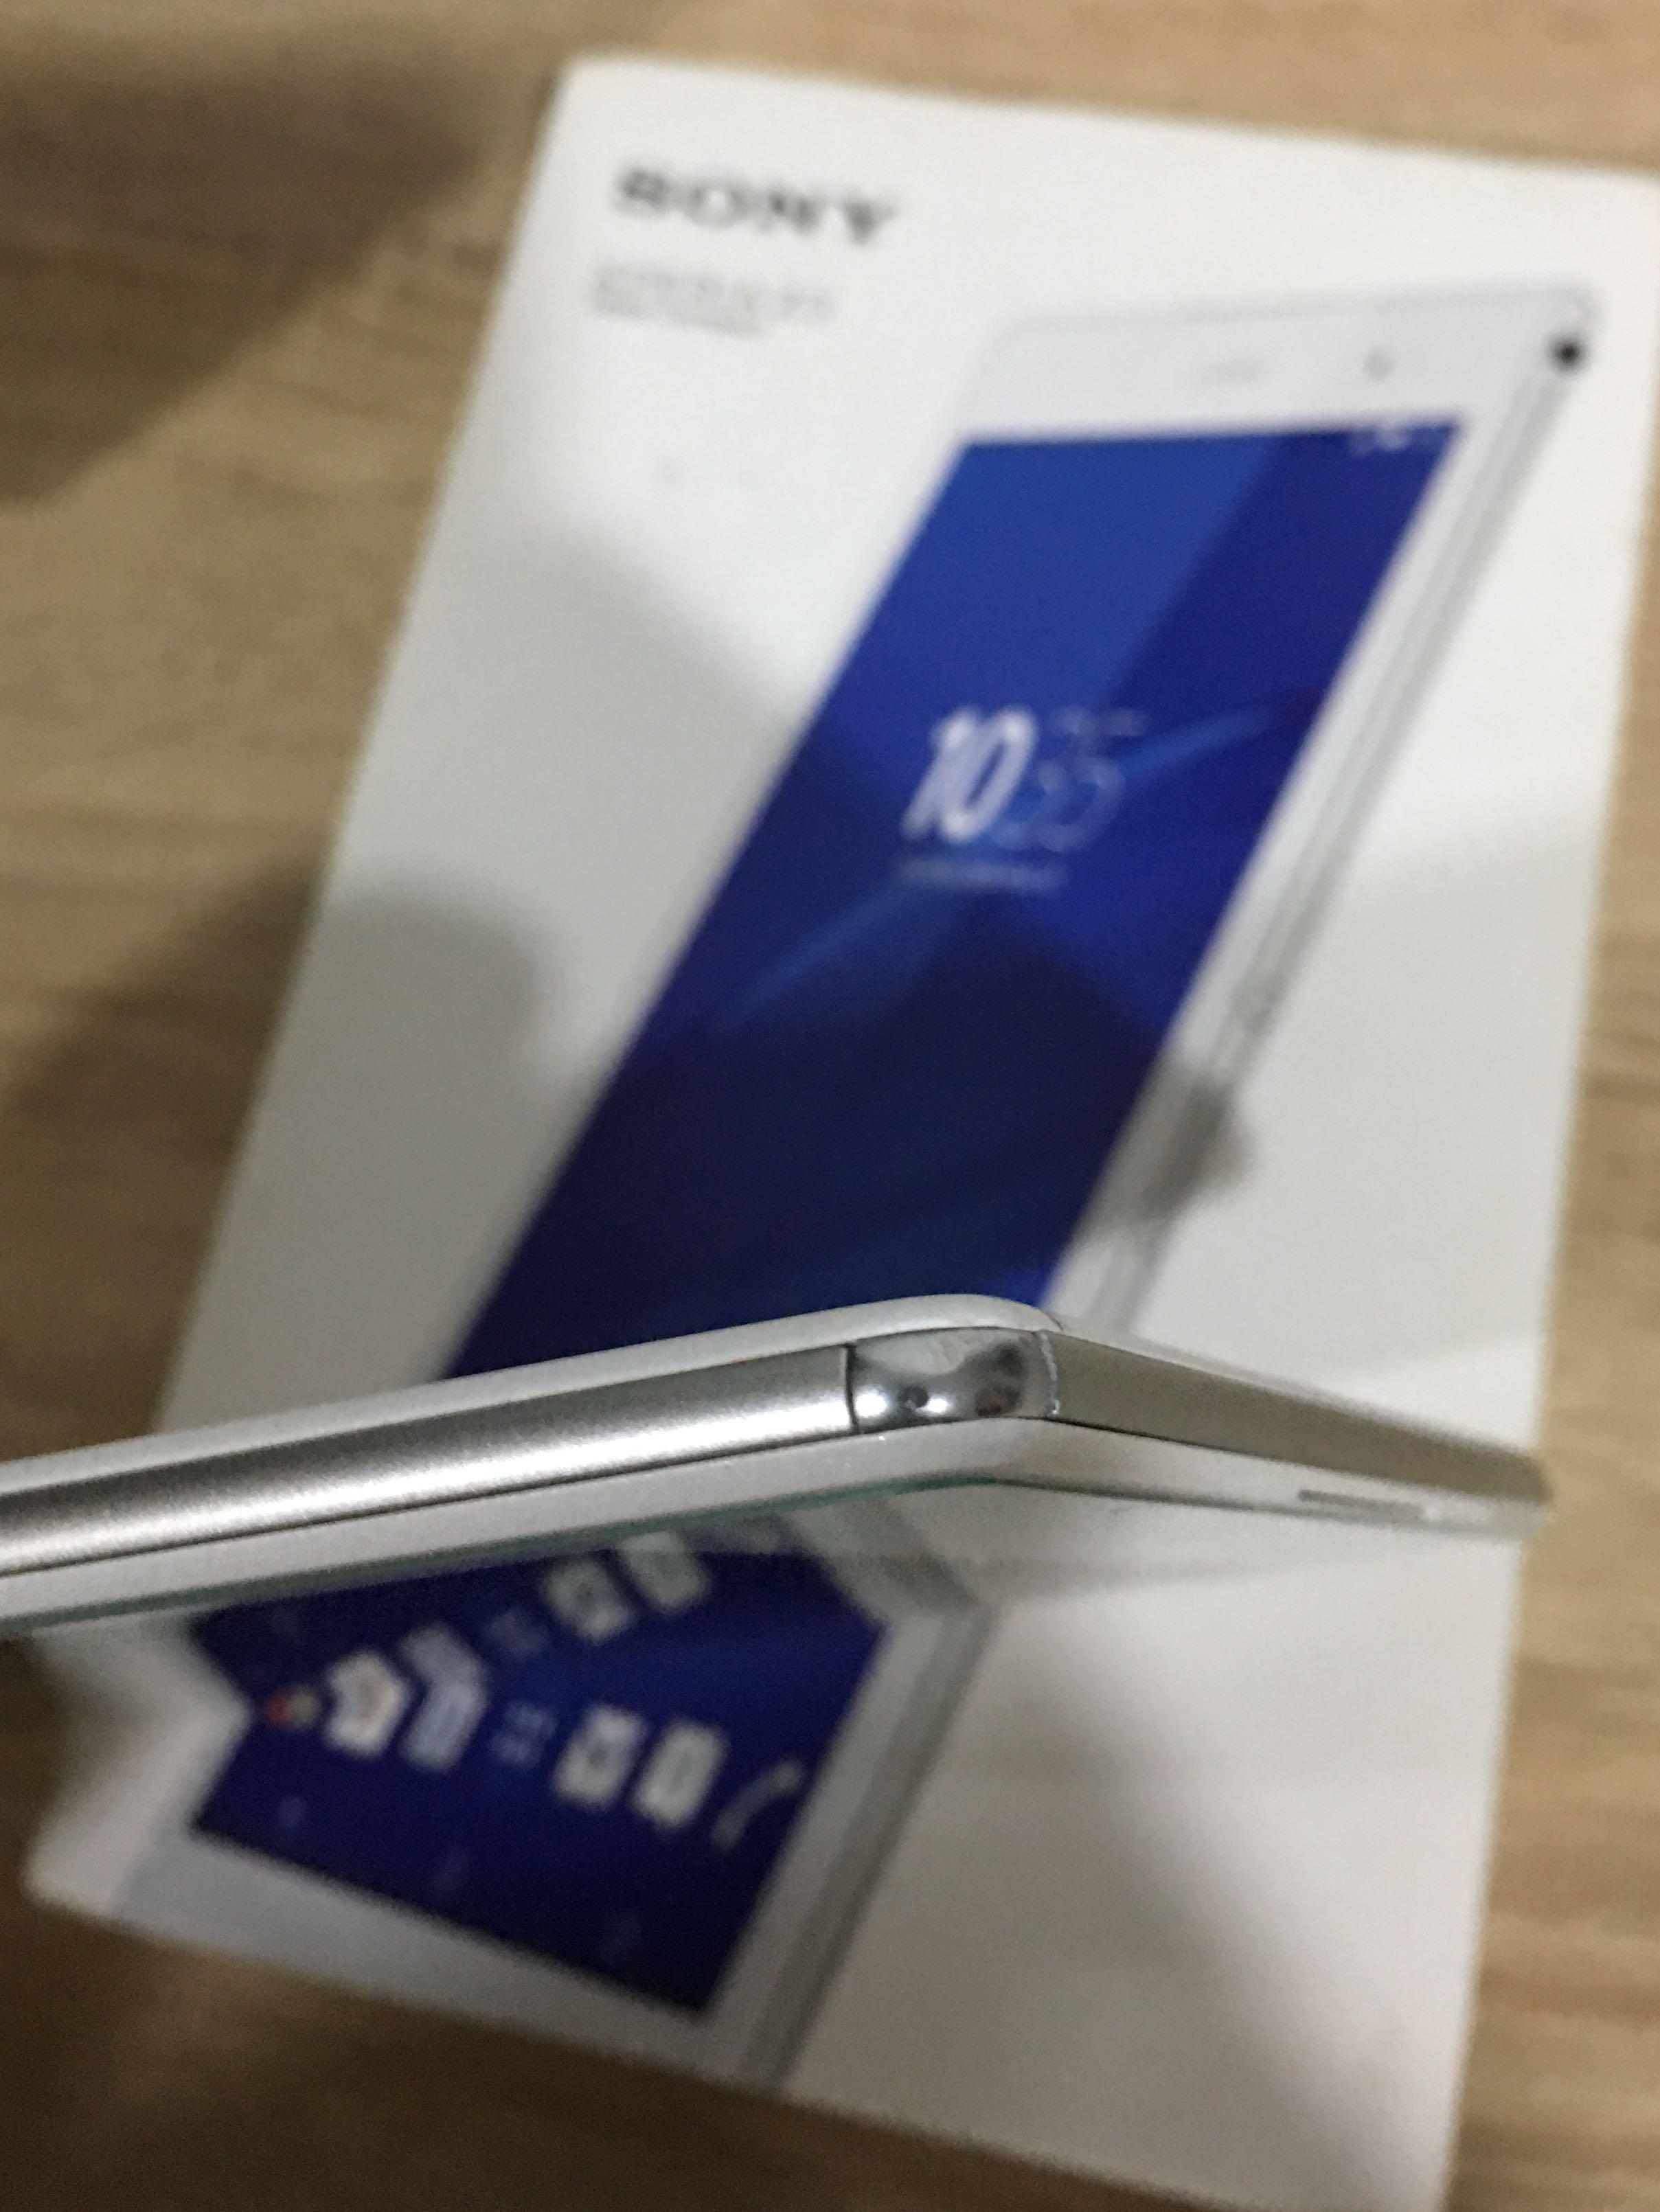 Sony Xperia Z3 Tablet SGP621 4G 16Go blanc tablette - Cdiscount Informatique